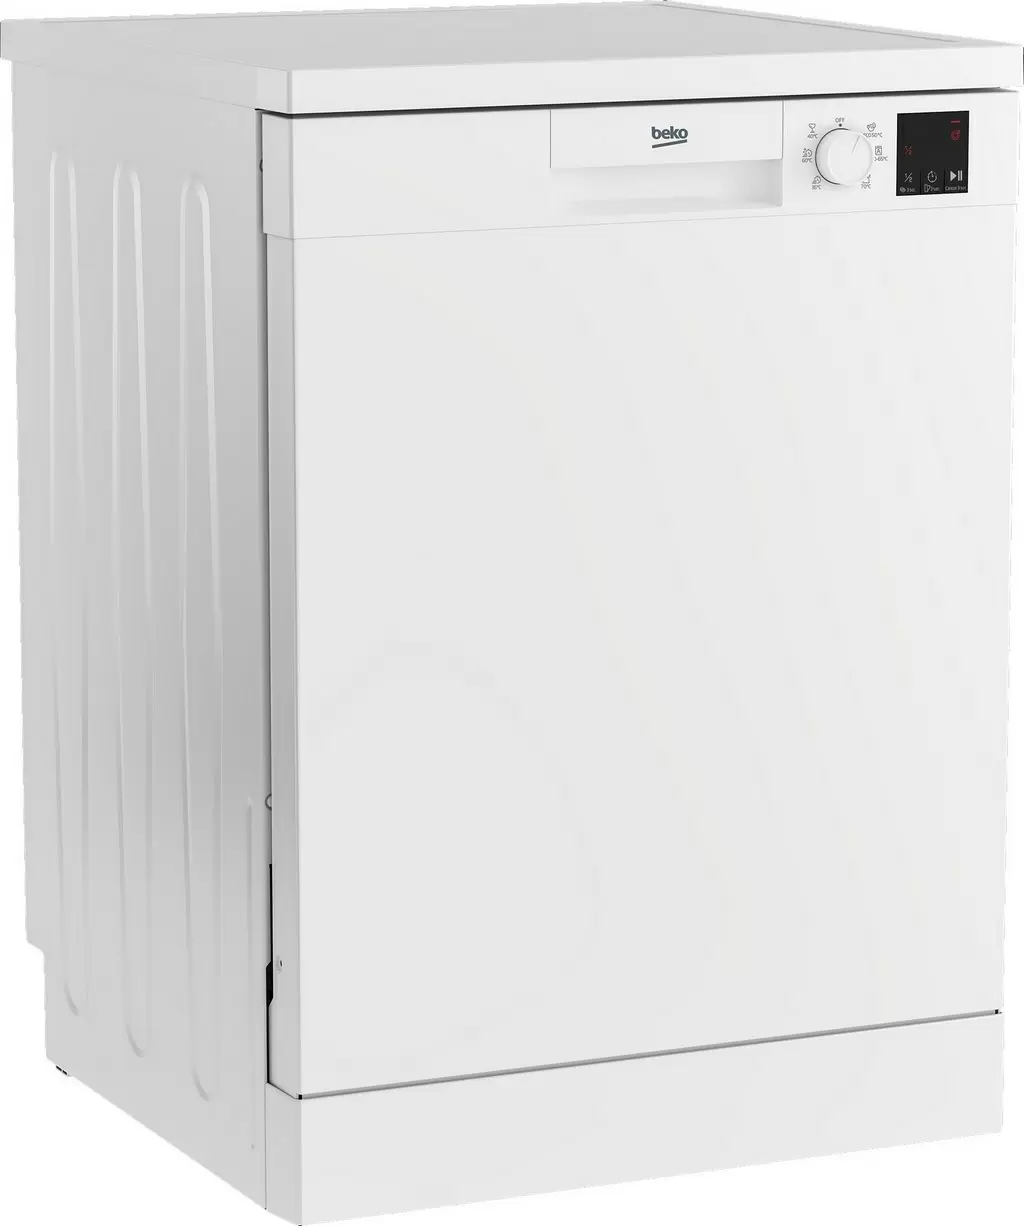 Посудомоечная машина Beko DVN06430W, белый